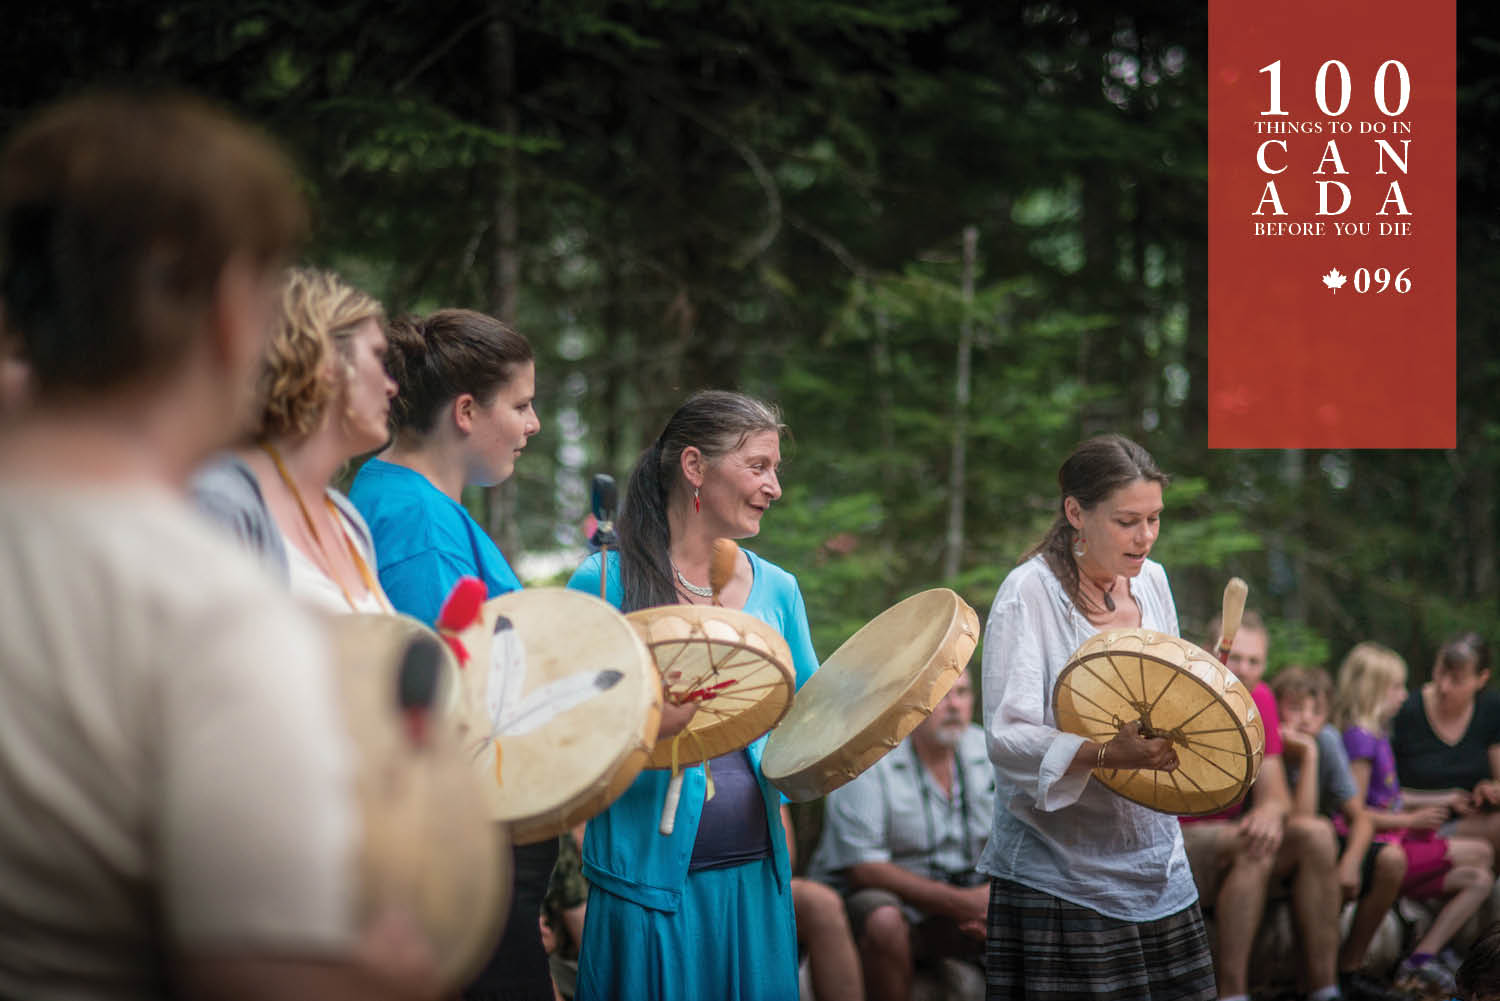 Connect with Nova Scotia's historic Mi'kmaq culture